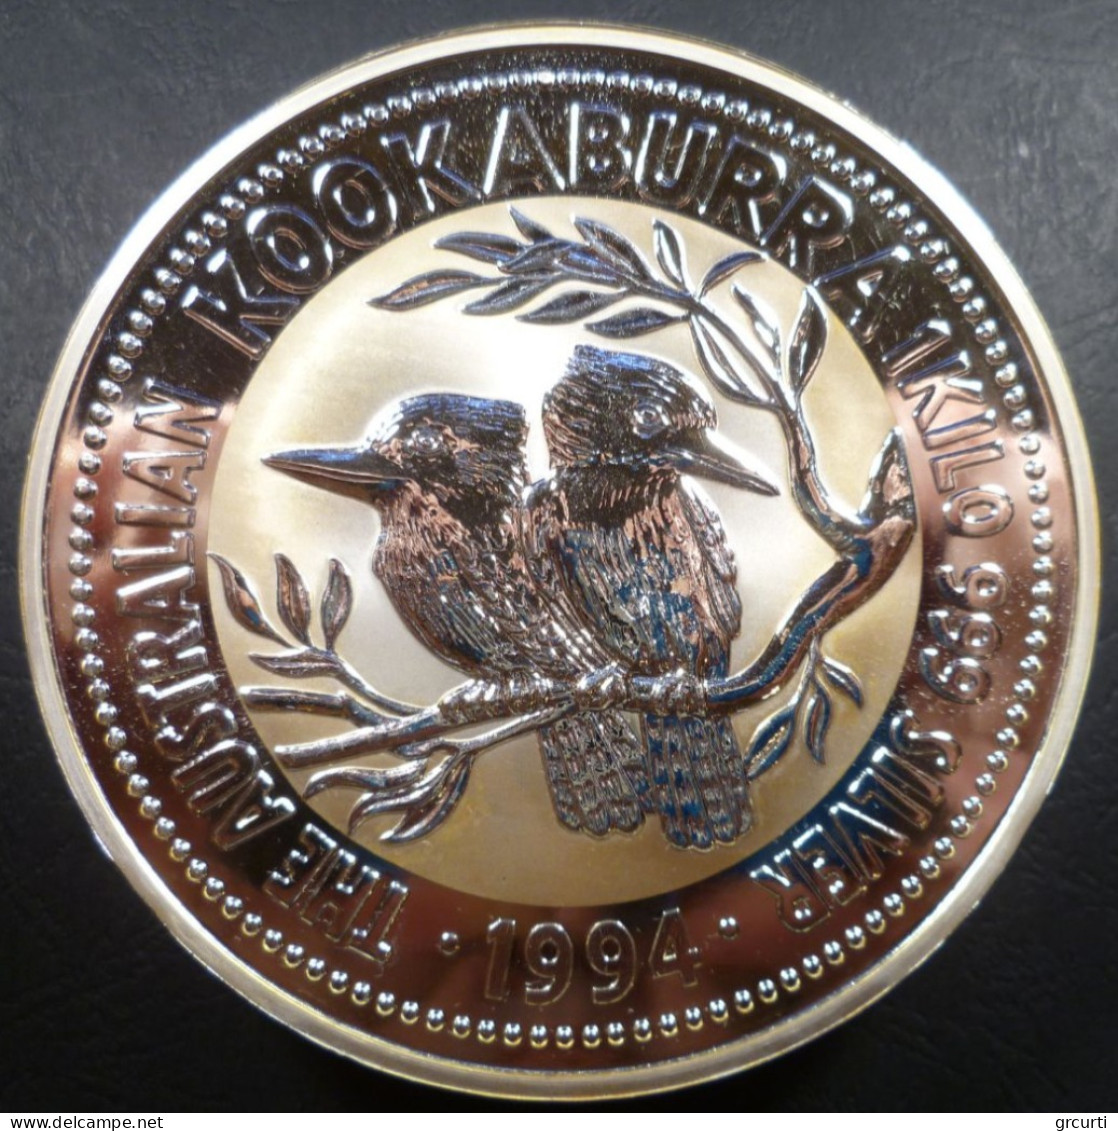 Australia - 30 Dollari 1994 - Kookaburra - KM# 232 - Silver Bullions